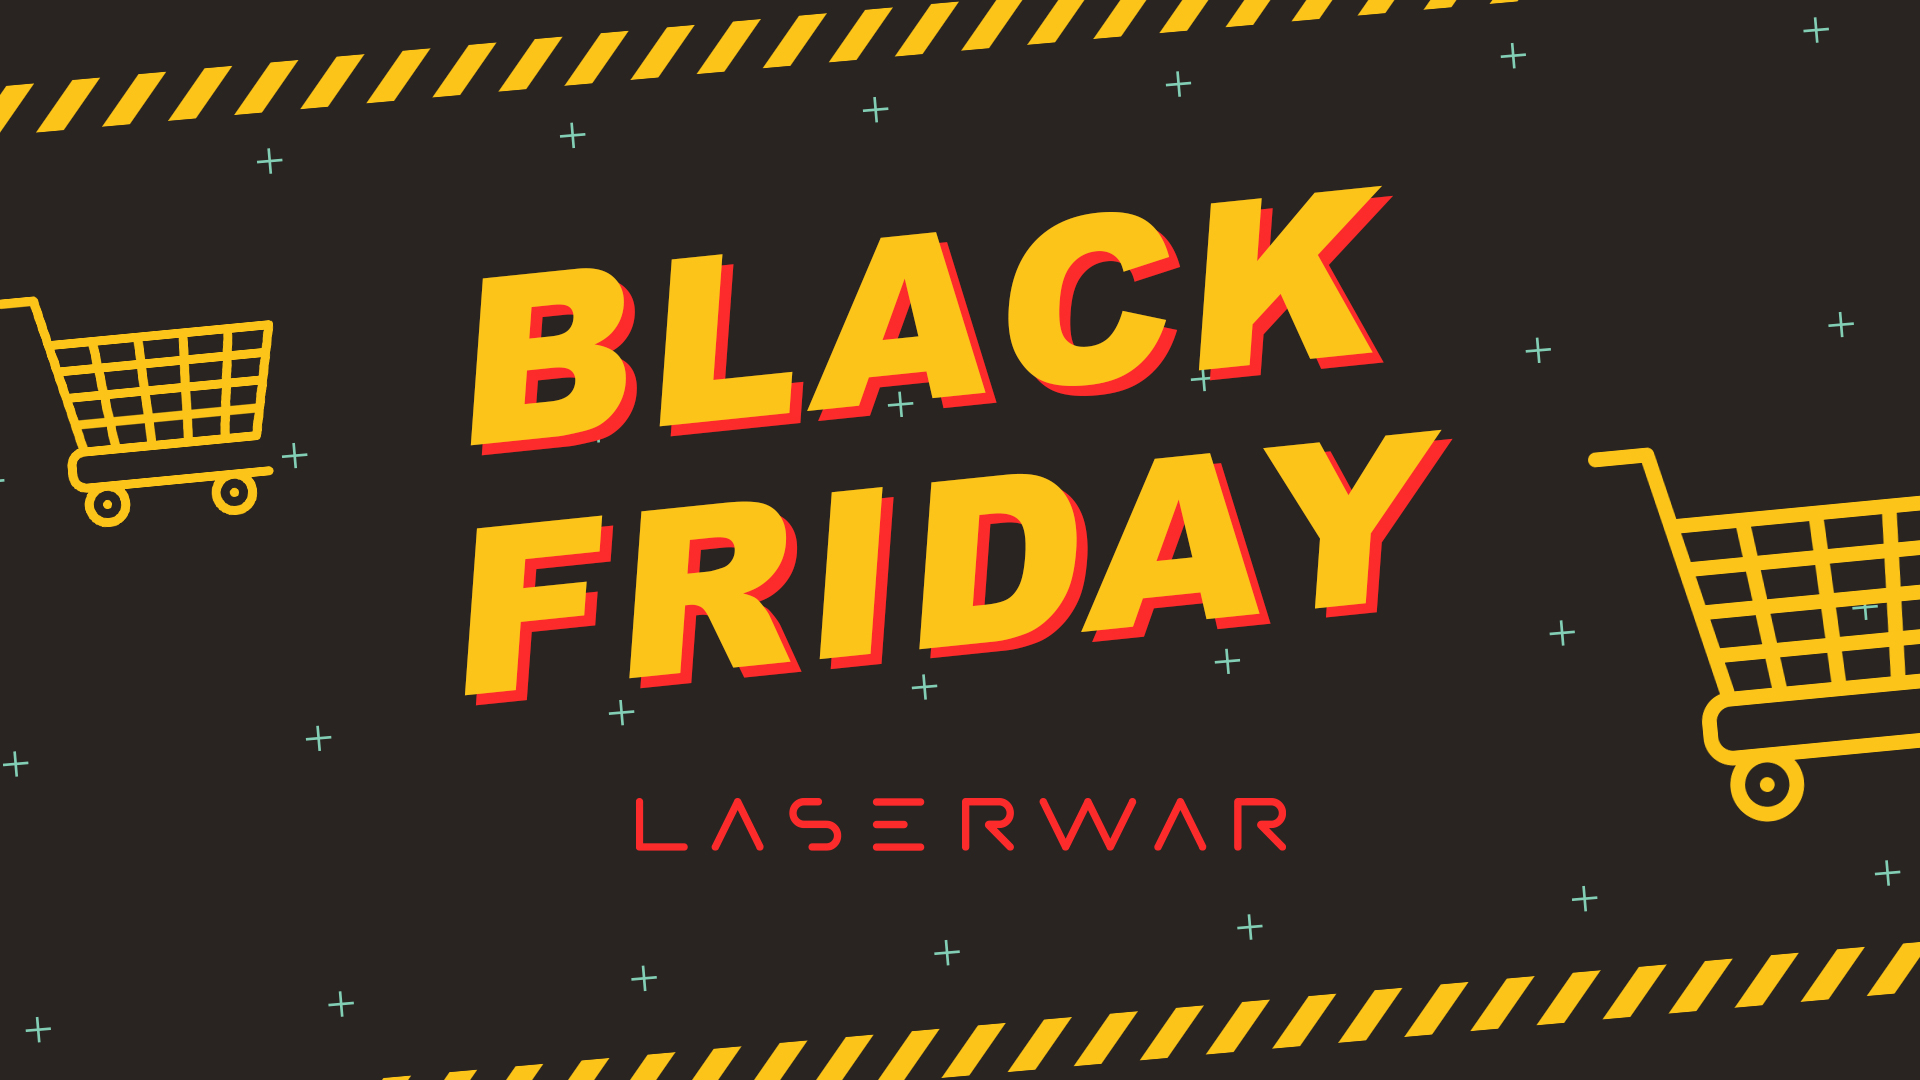 Black friday sale from LASERWAR